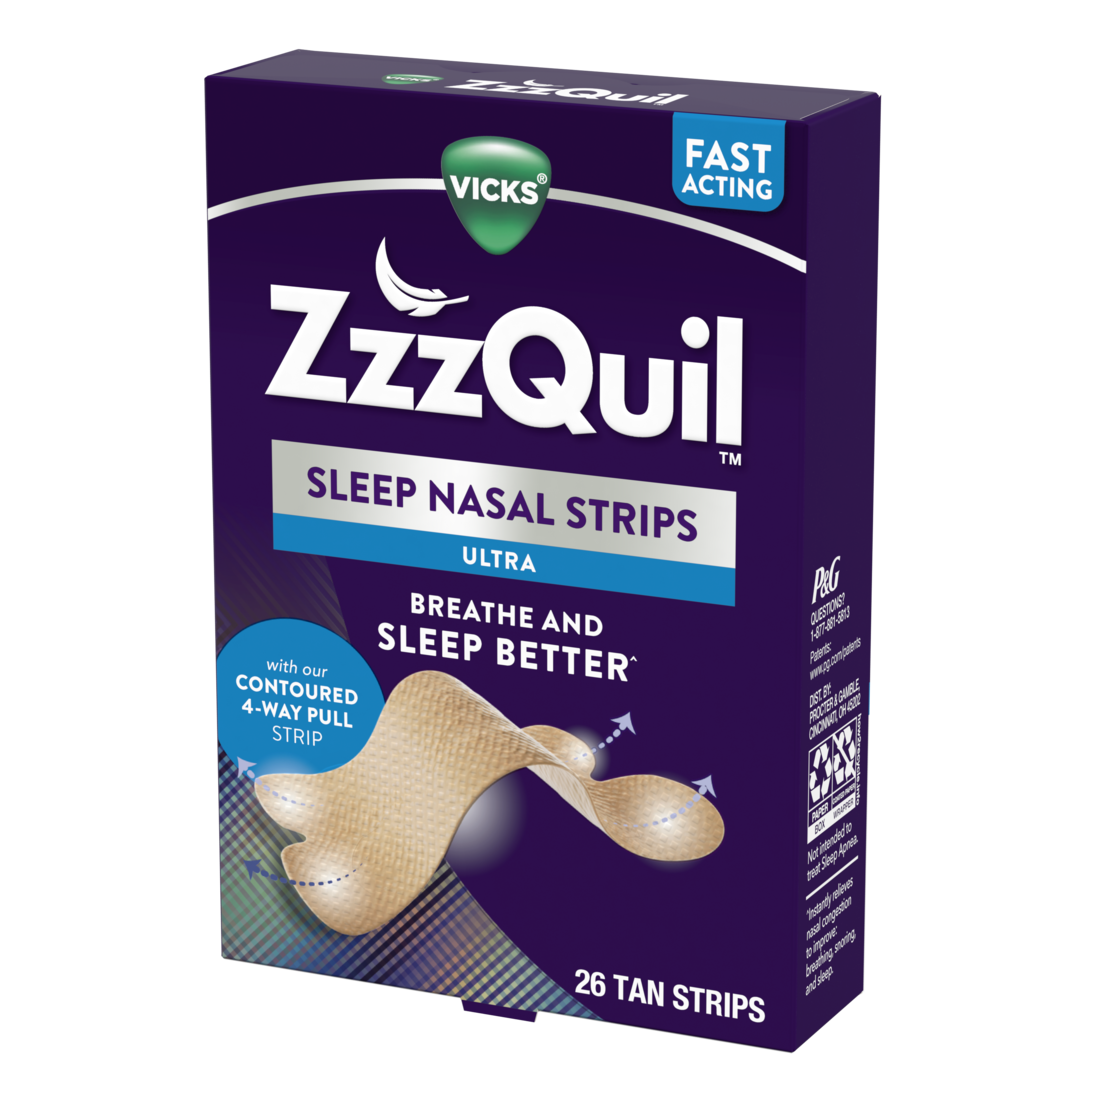 ZzzQuil Sleep Nasal Strips Ultra